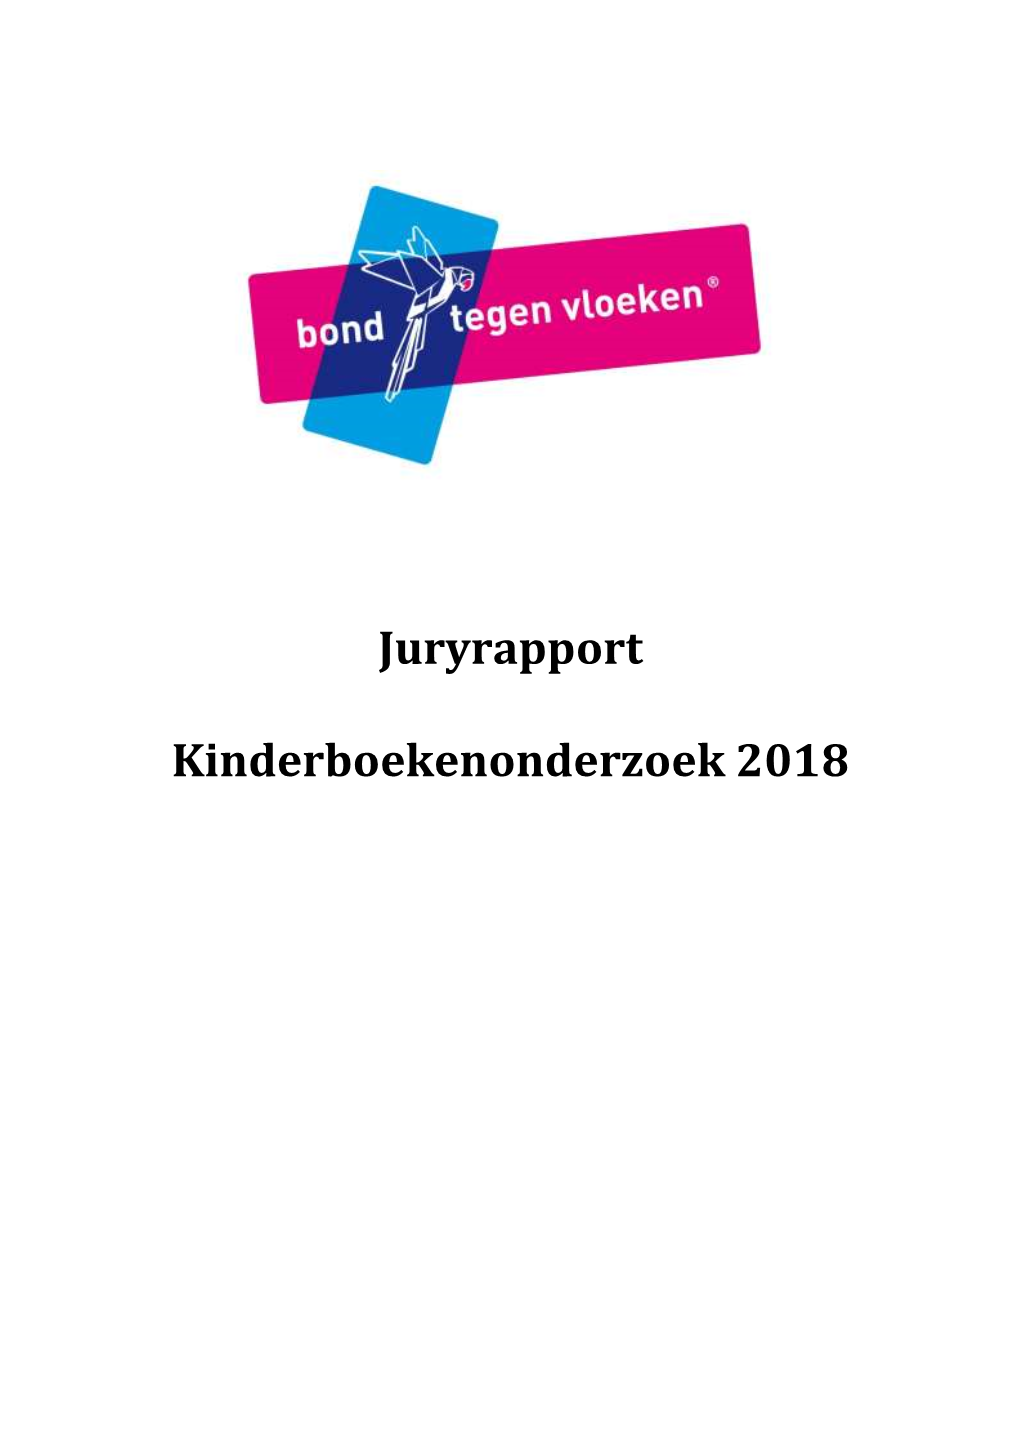 Juryrapport Kinderboekenonderzoek 2018